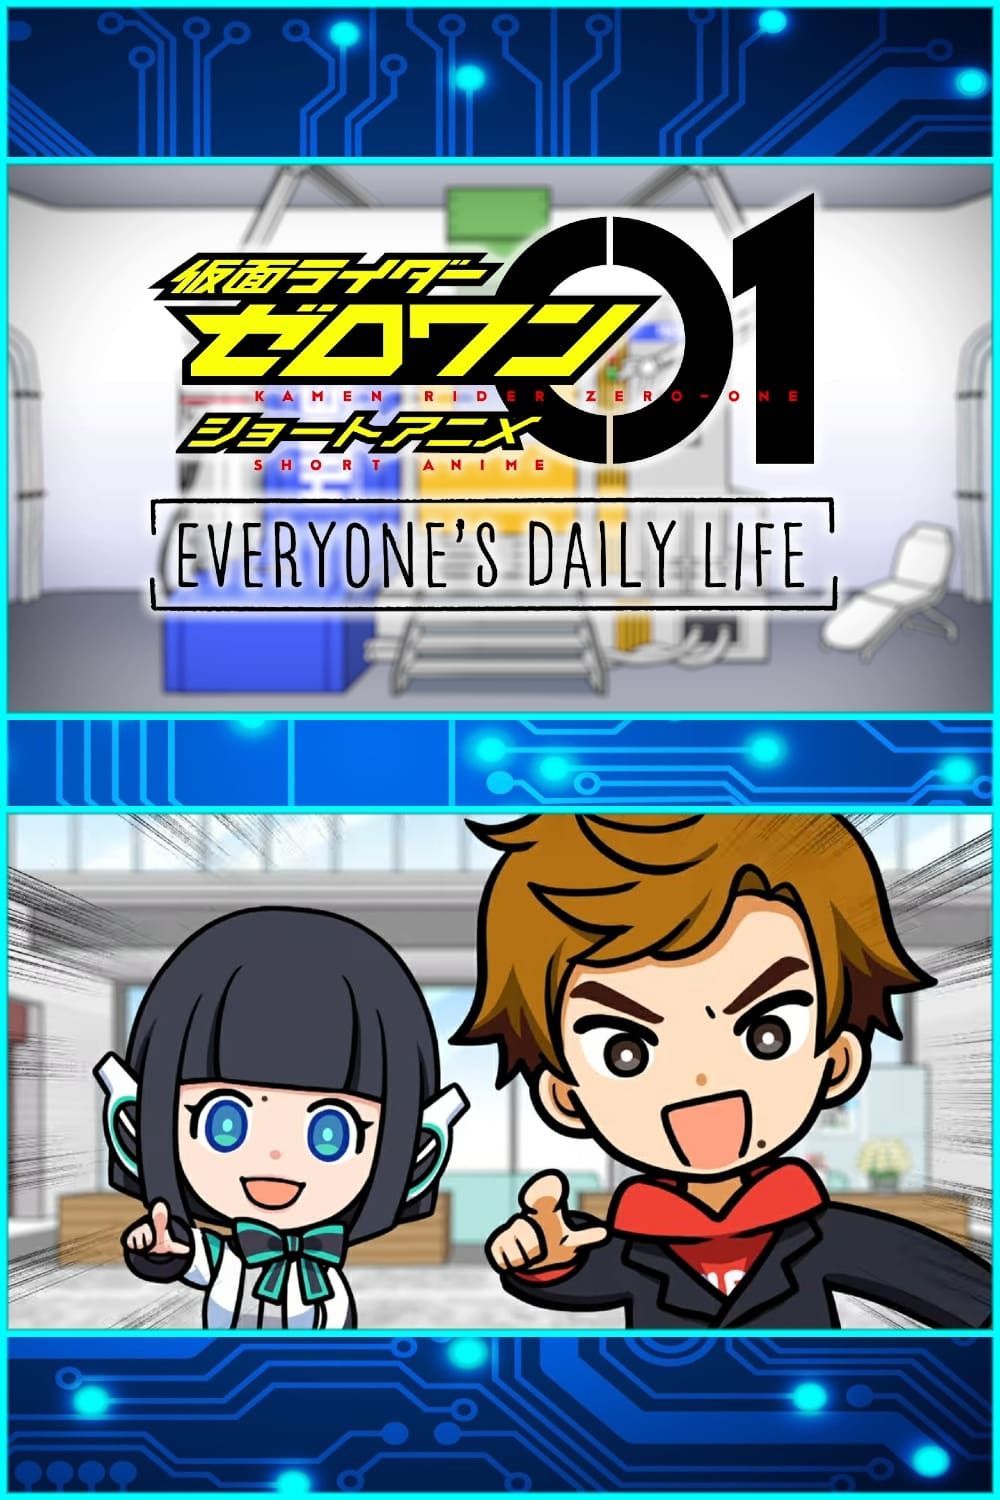 [Slice Of Life] Kamen Rider Zero-One: Short Anime - Everyone's Daily Life (ONA) (Sub) New Released